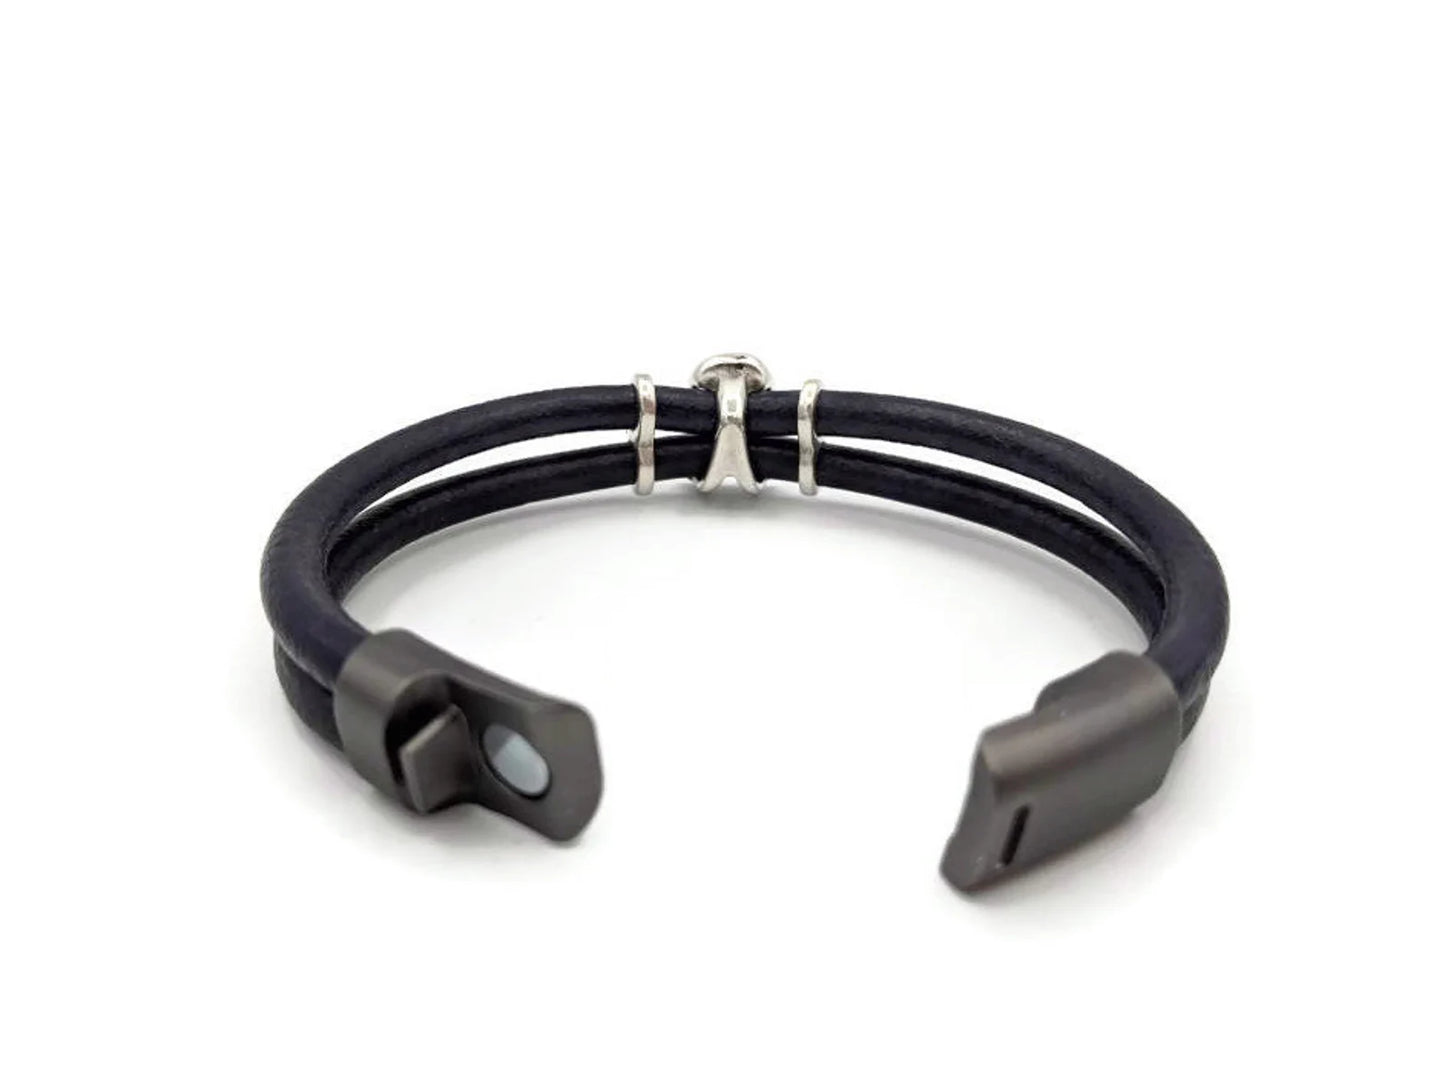 Colon Cancer Double Leather Awareness Bracelet